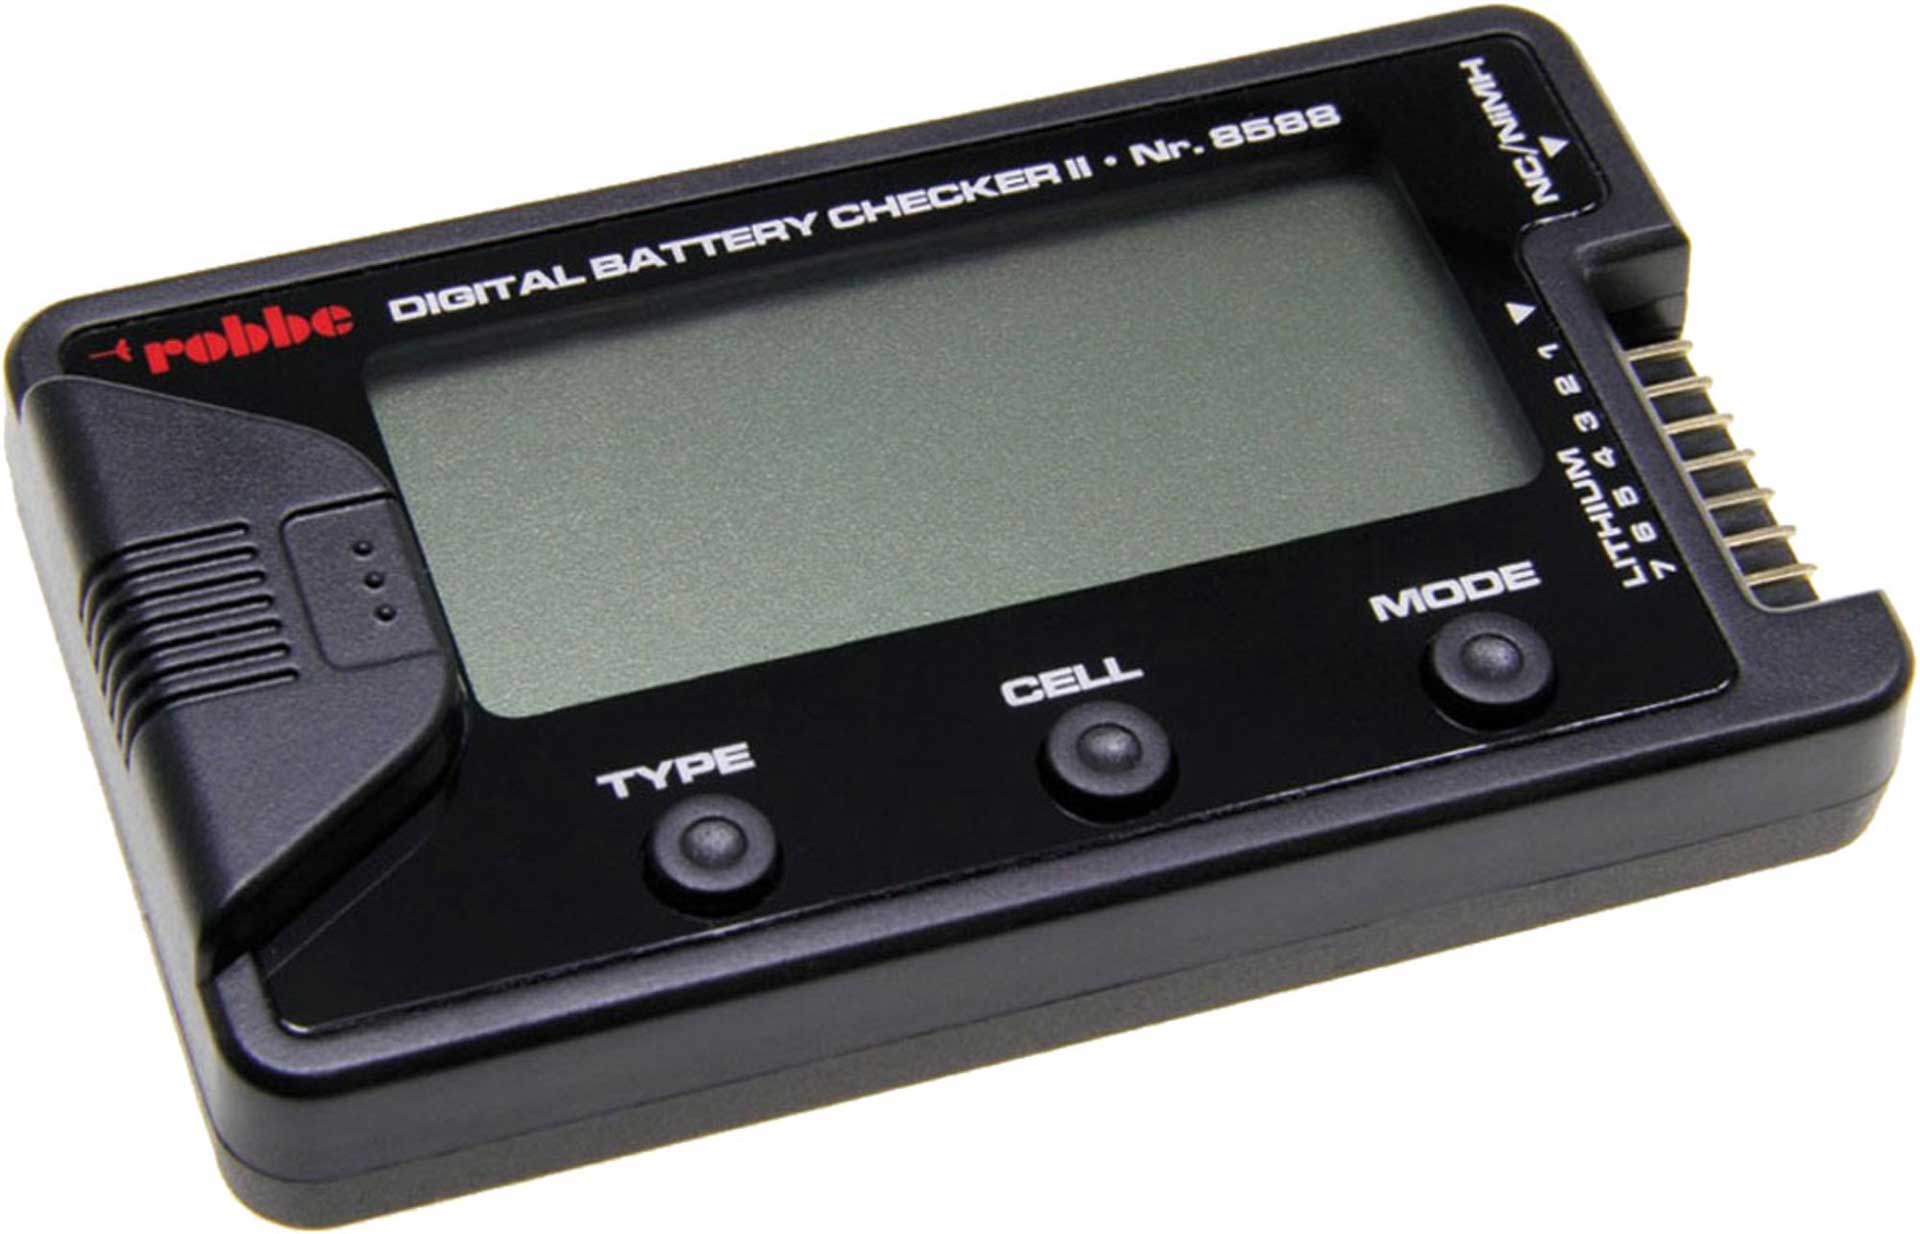 Robbe Modellsport Digital Battery Checker II